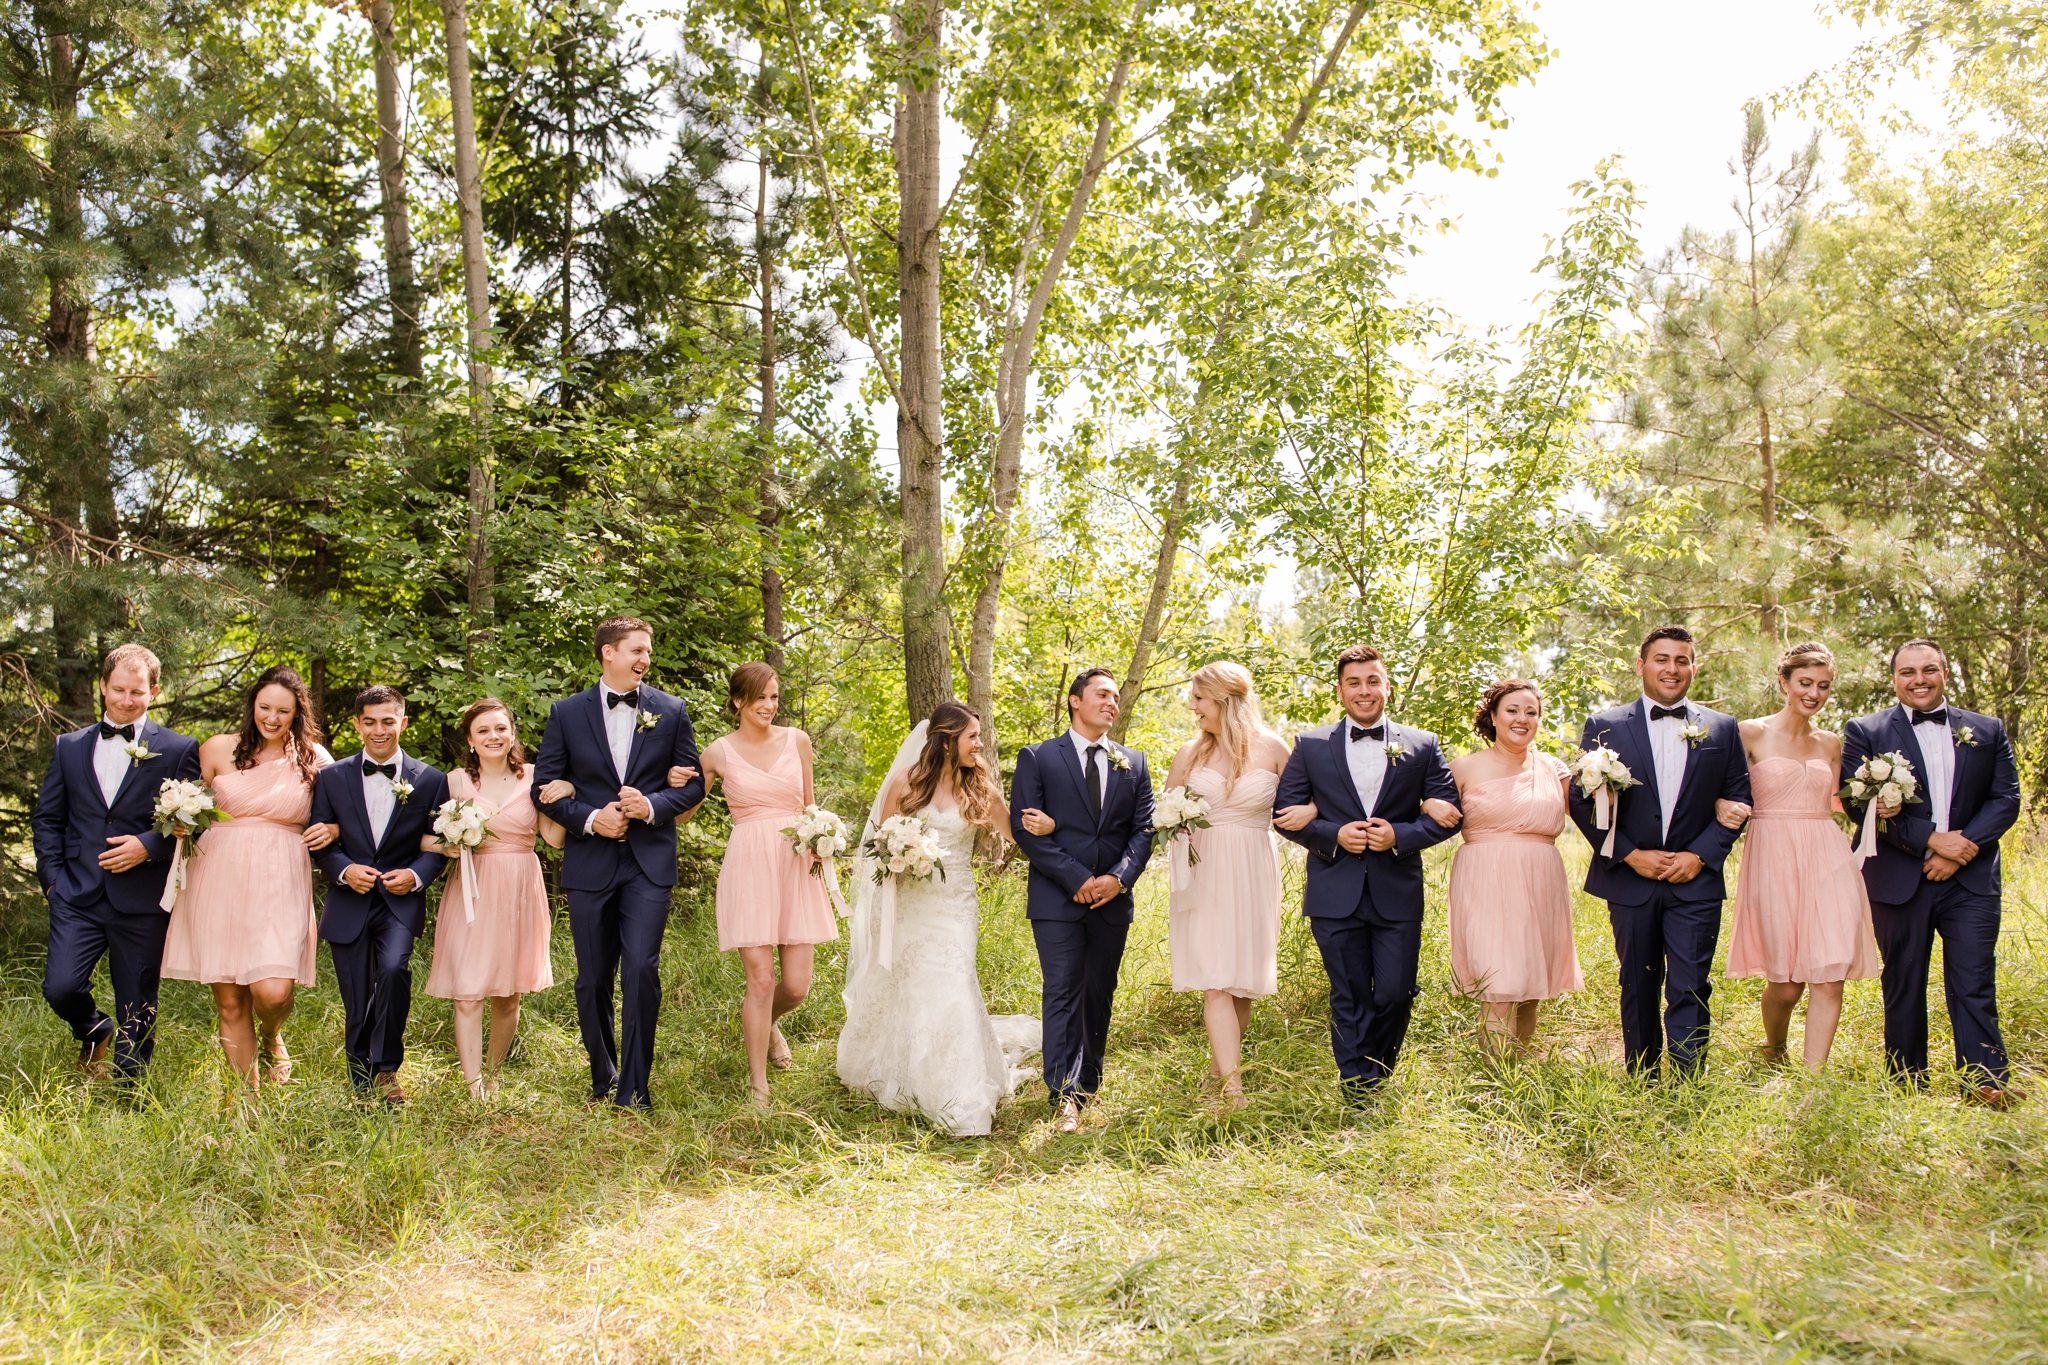 Minnesota wedding photographers, summer barn weddings, Brittney and Caleb 